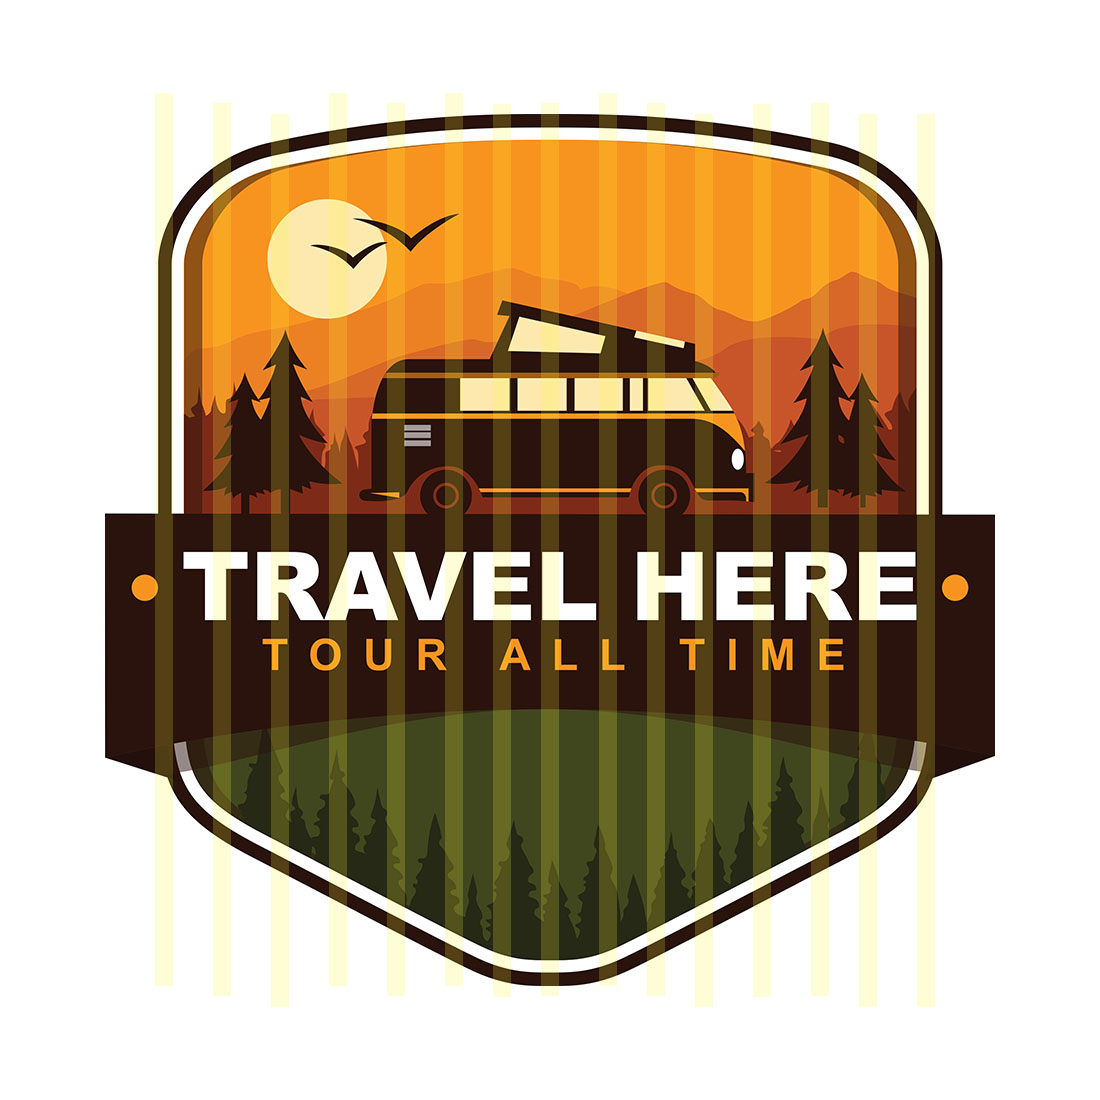 Travel logo cover image.